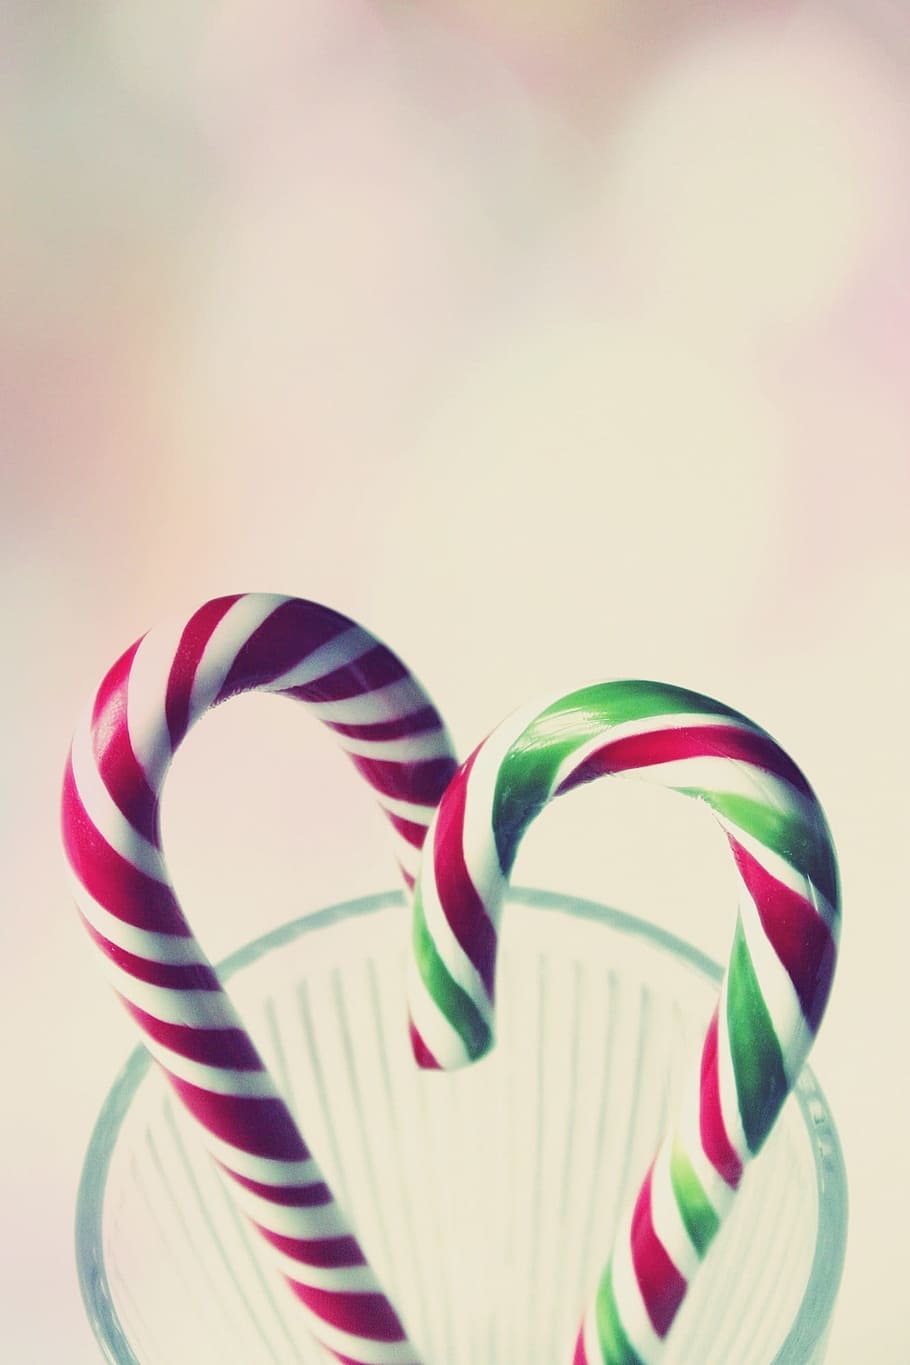 selectivo, foto de enfoque, dos, multicolor, bastón de caramelo, dulzura, dulce, azúcar, navidad, convite